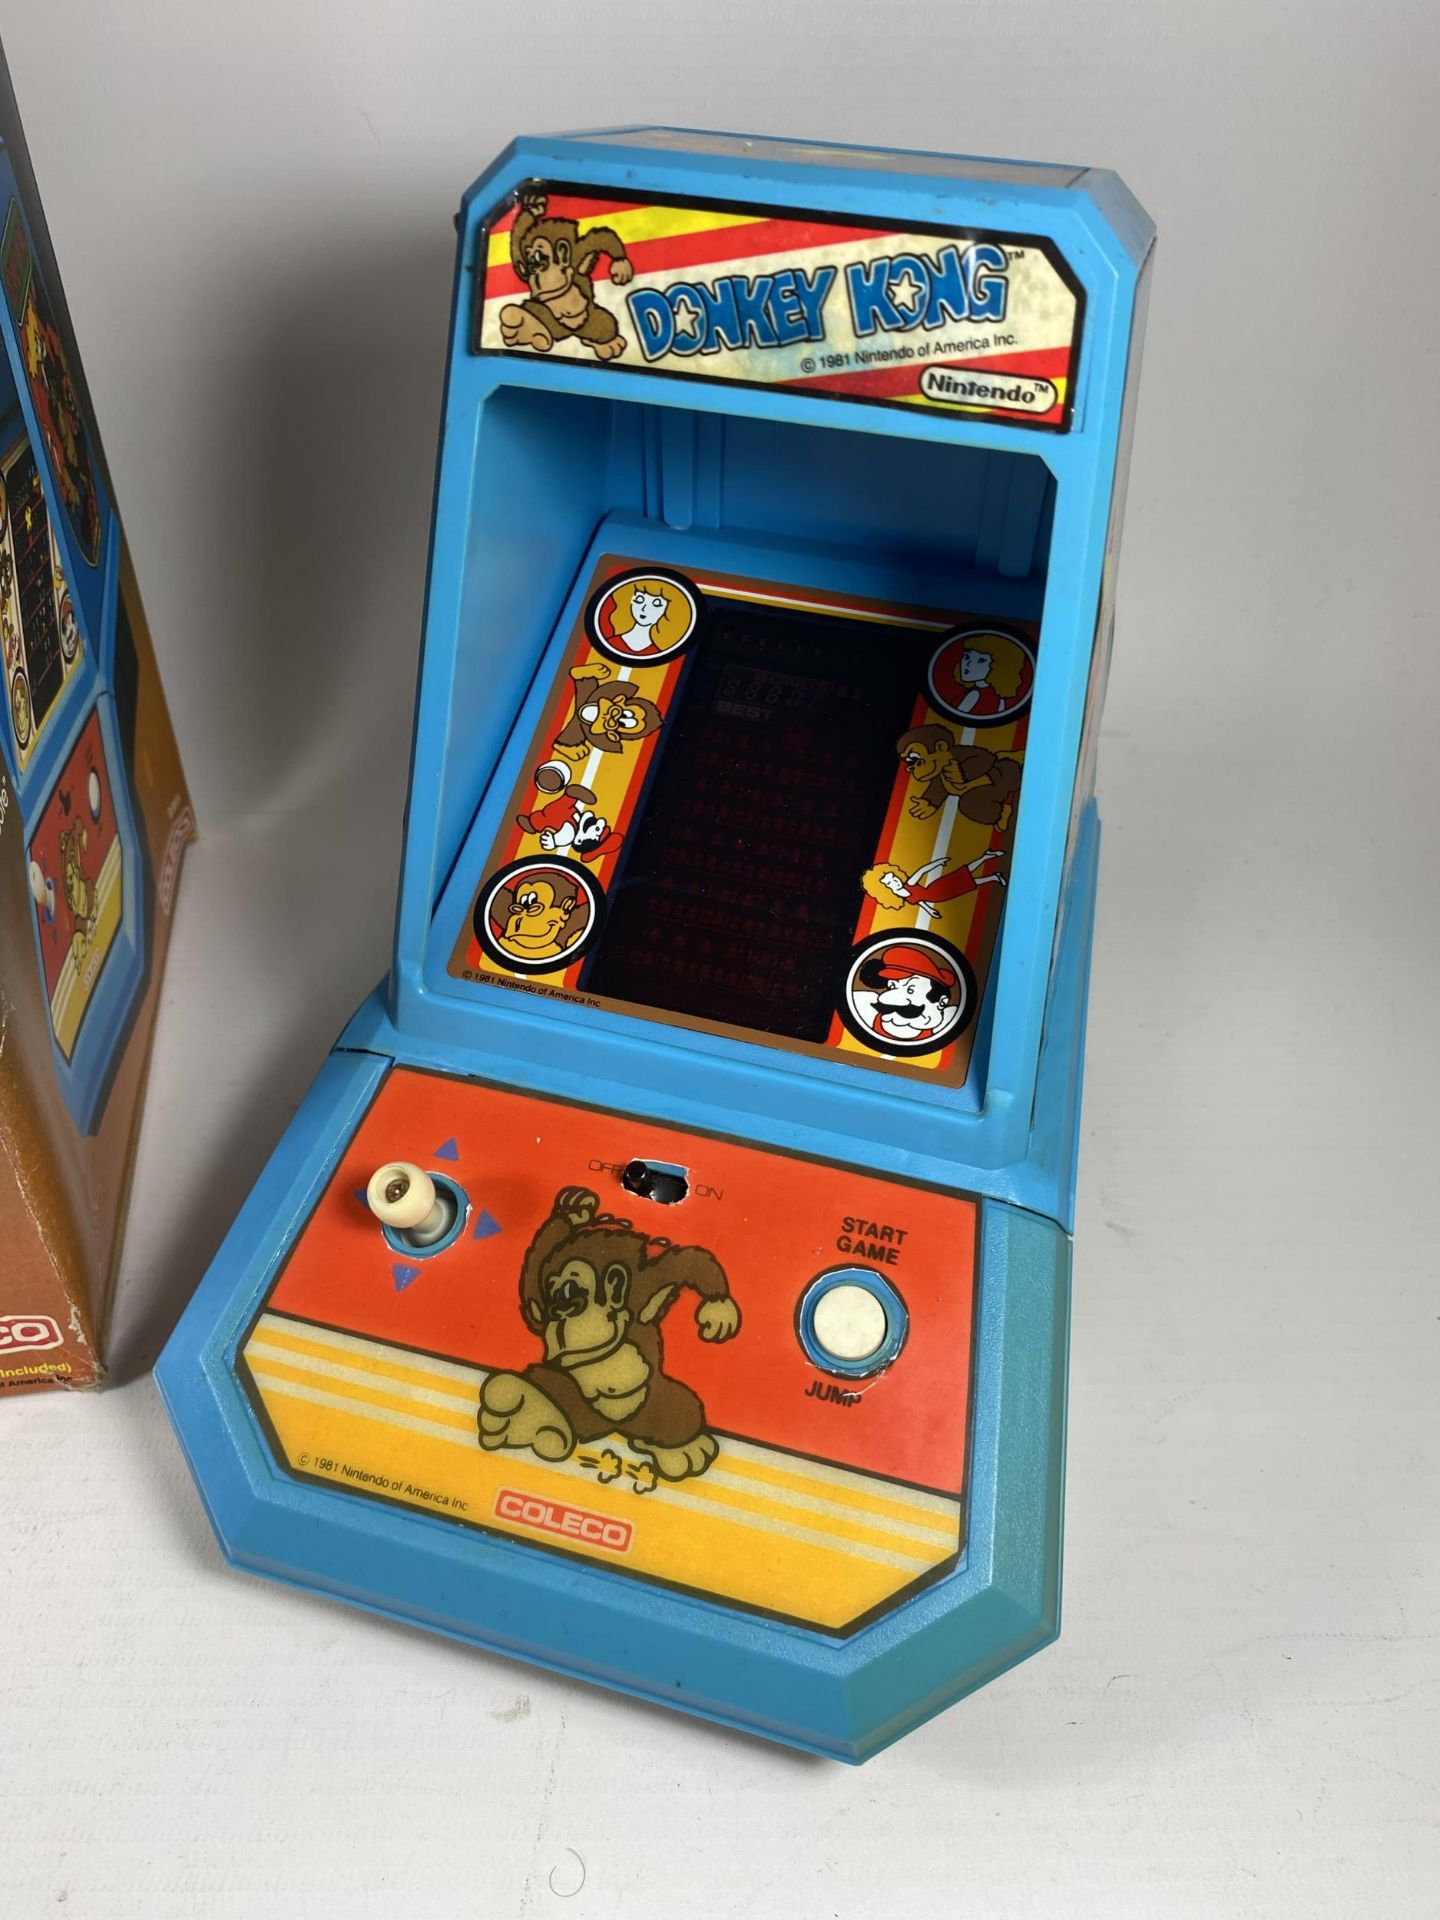 A BOXED RETRO 1981 NINTENDO DONKEY KONG ARCADE GAME - Image 2 of 4